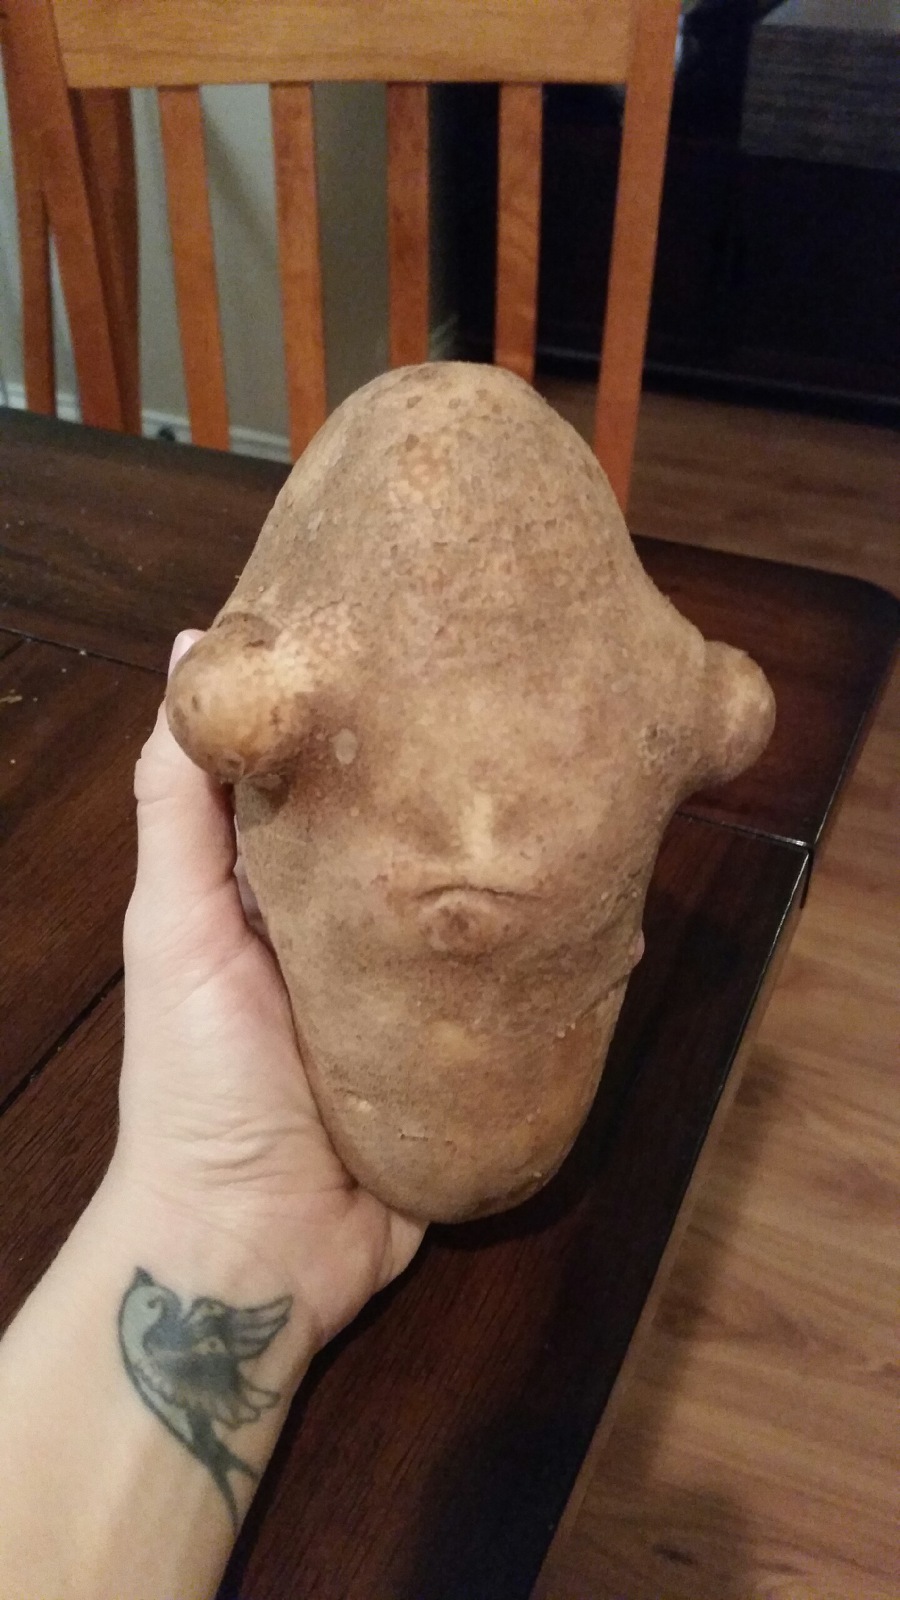 This potato reminds me of someone... - Potato, Admiral Akbar, Photo, Humor